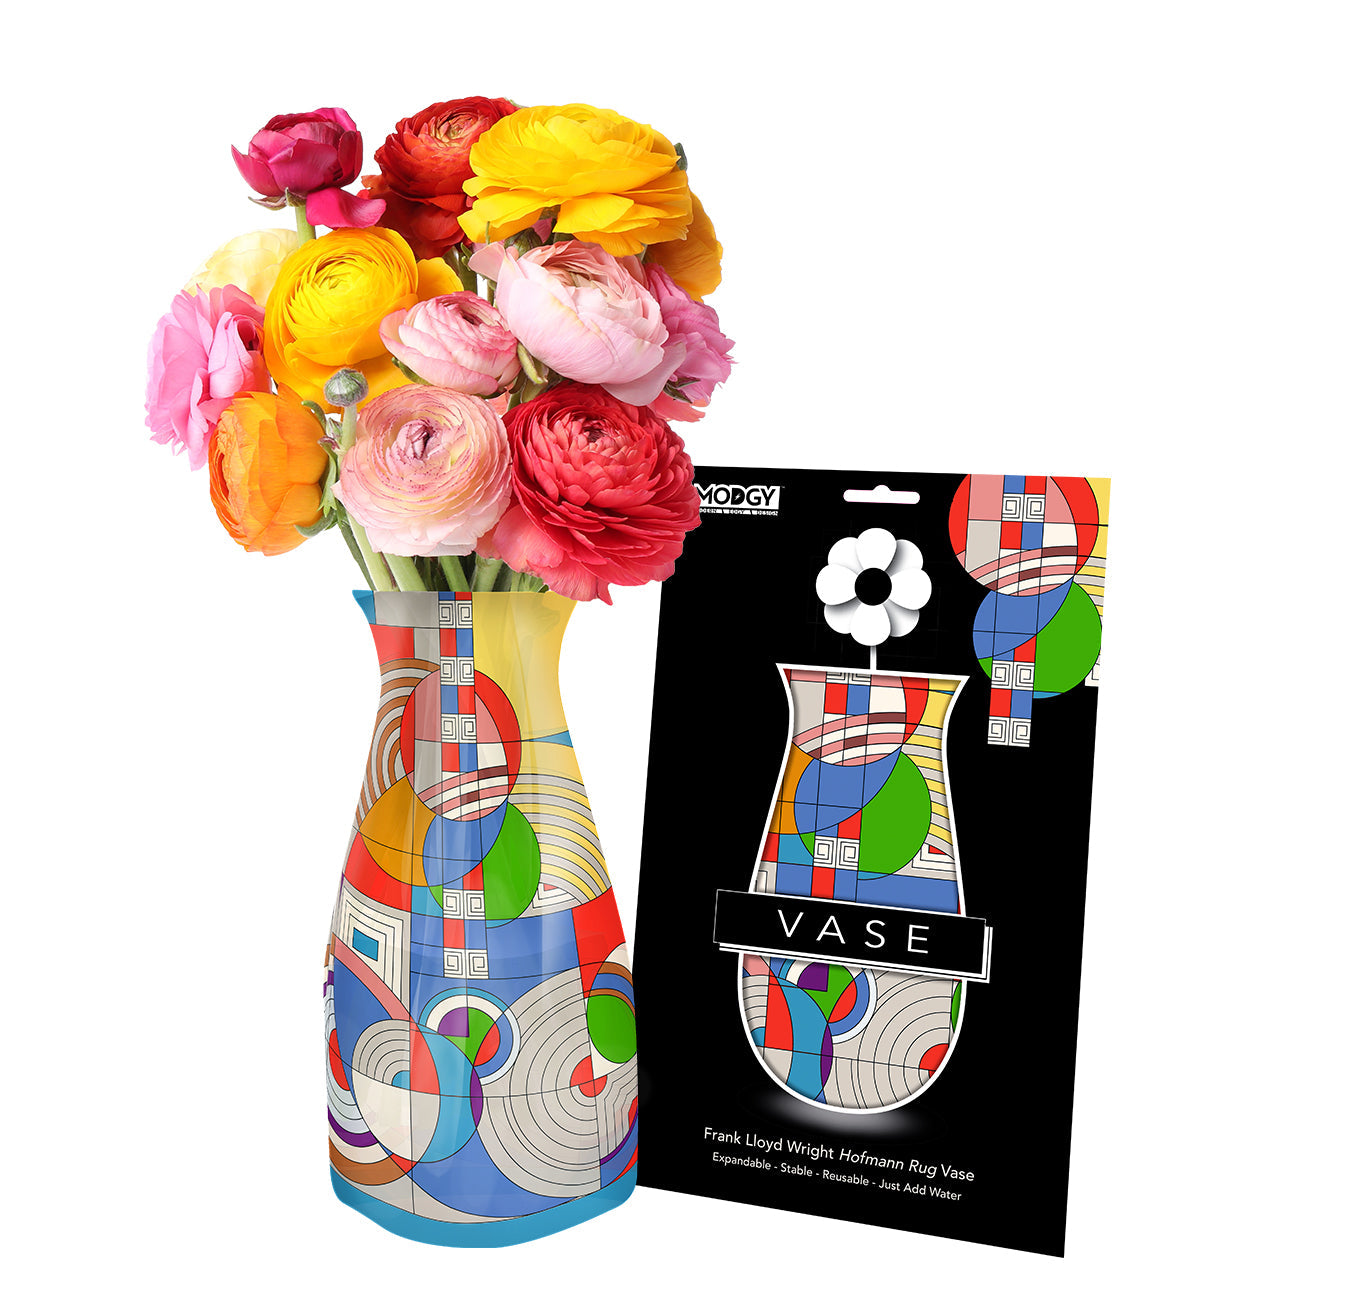 Frank Lloyd Wright "Hoffman Rug" Expandable Vase